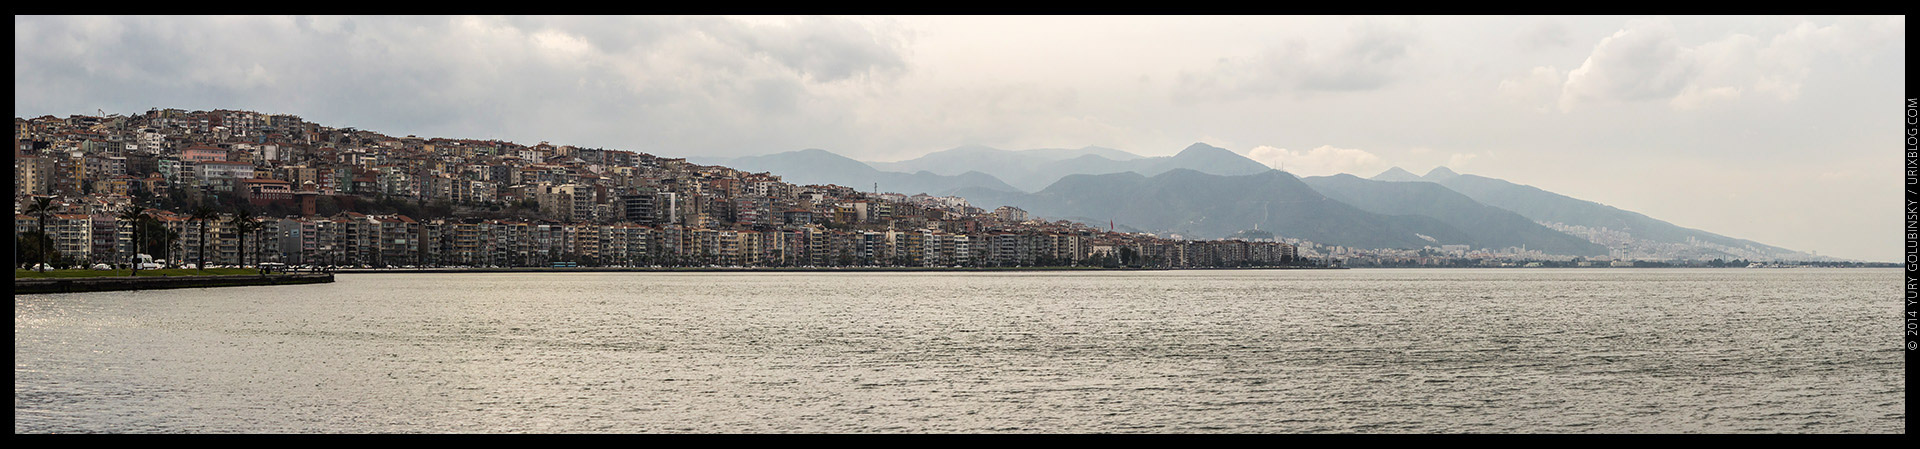 2014, Izmir, bay, Turkey, panorama, horizon, Aegean sea, seafront, embankment, ships